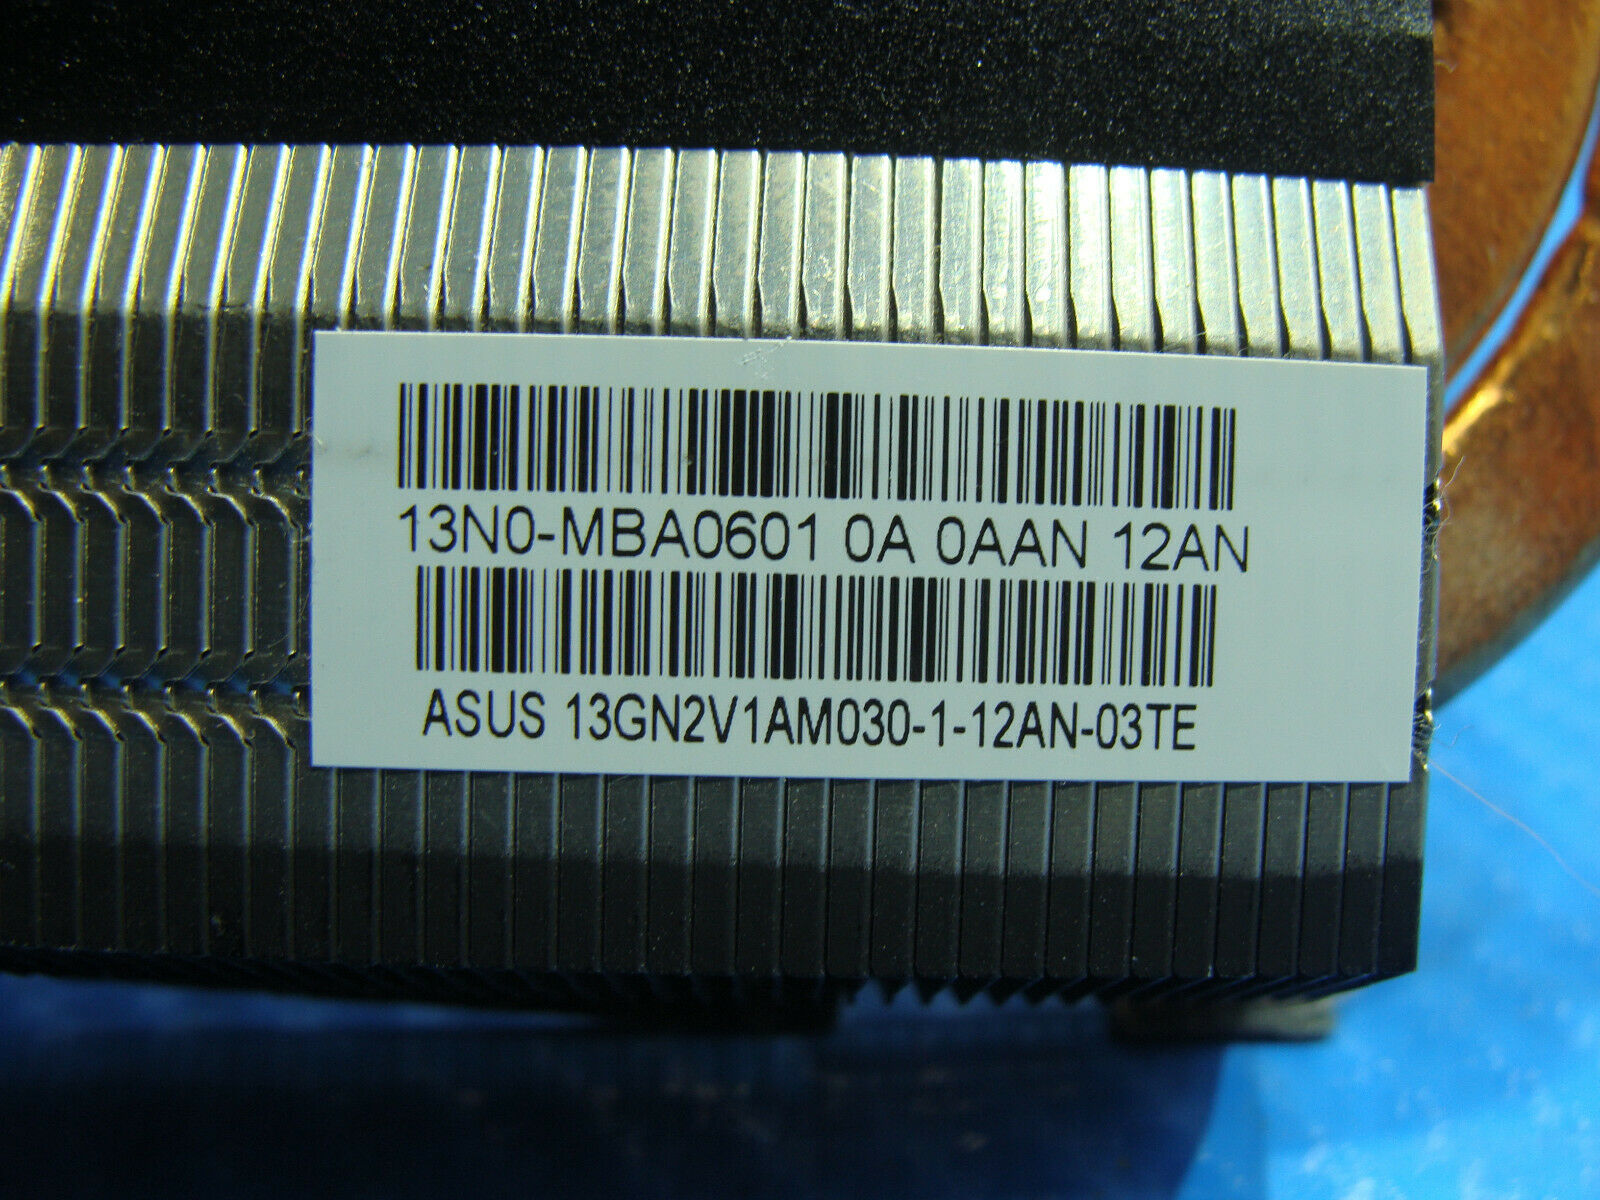 Asus ROG G75VW-TH71 17.3